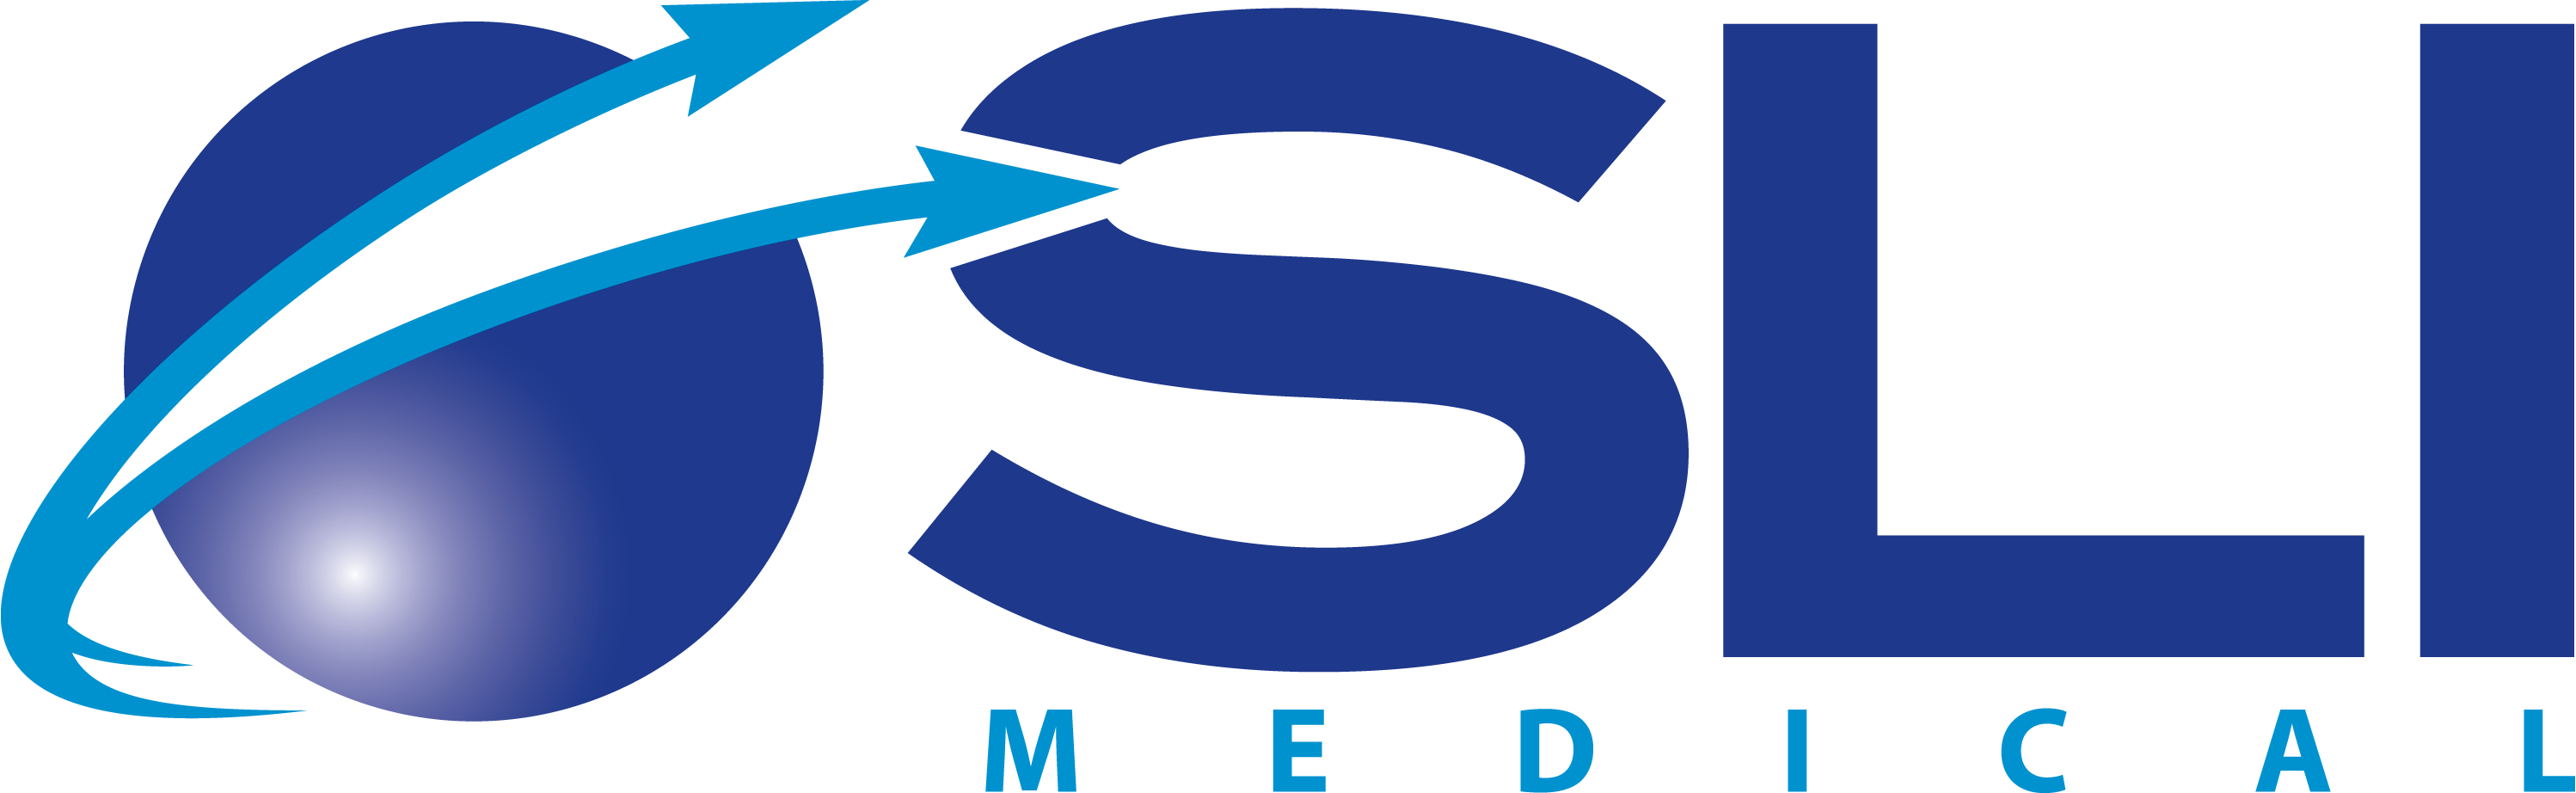 SLI Medical